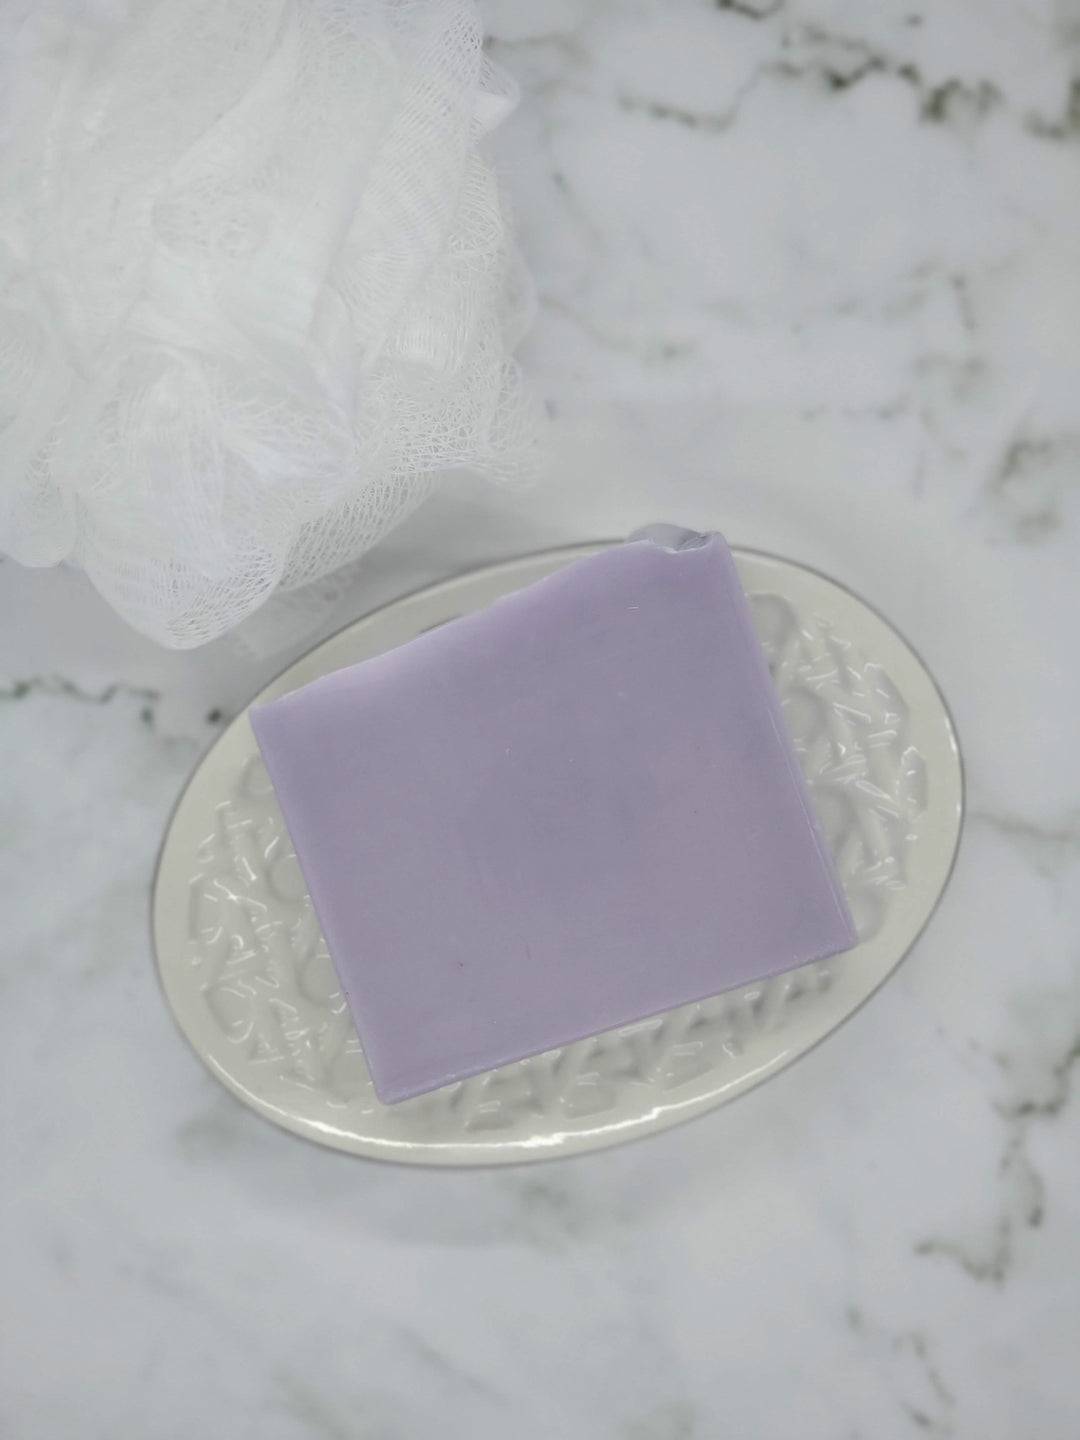 Lavender Soap Bar.